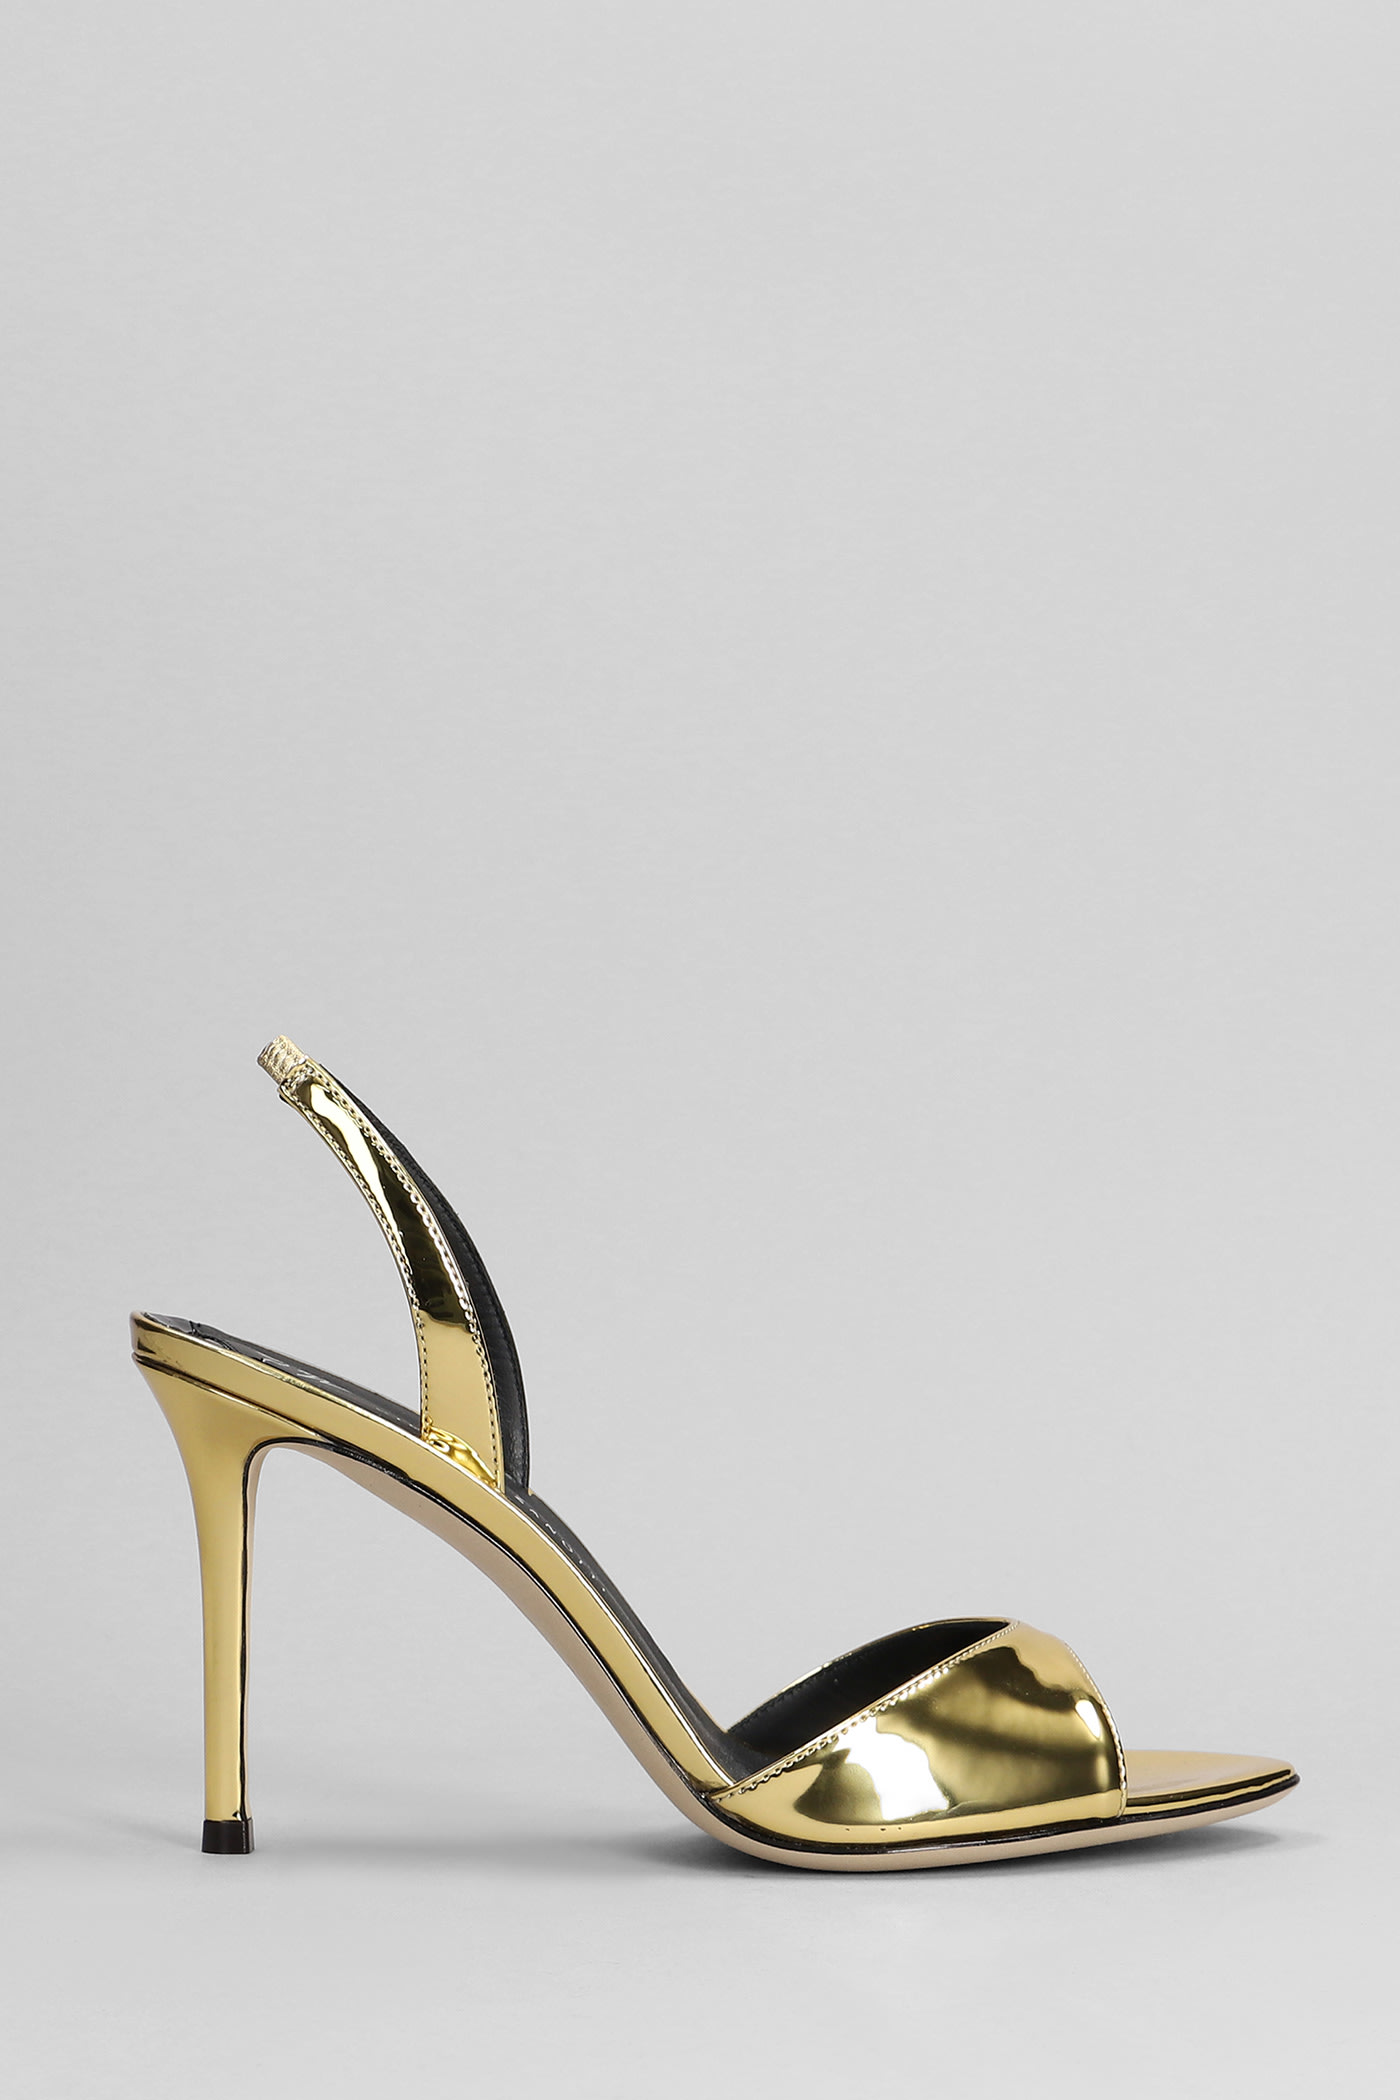 Giuseppe Zanotti Sandals In Gold Patent Leather